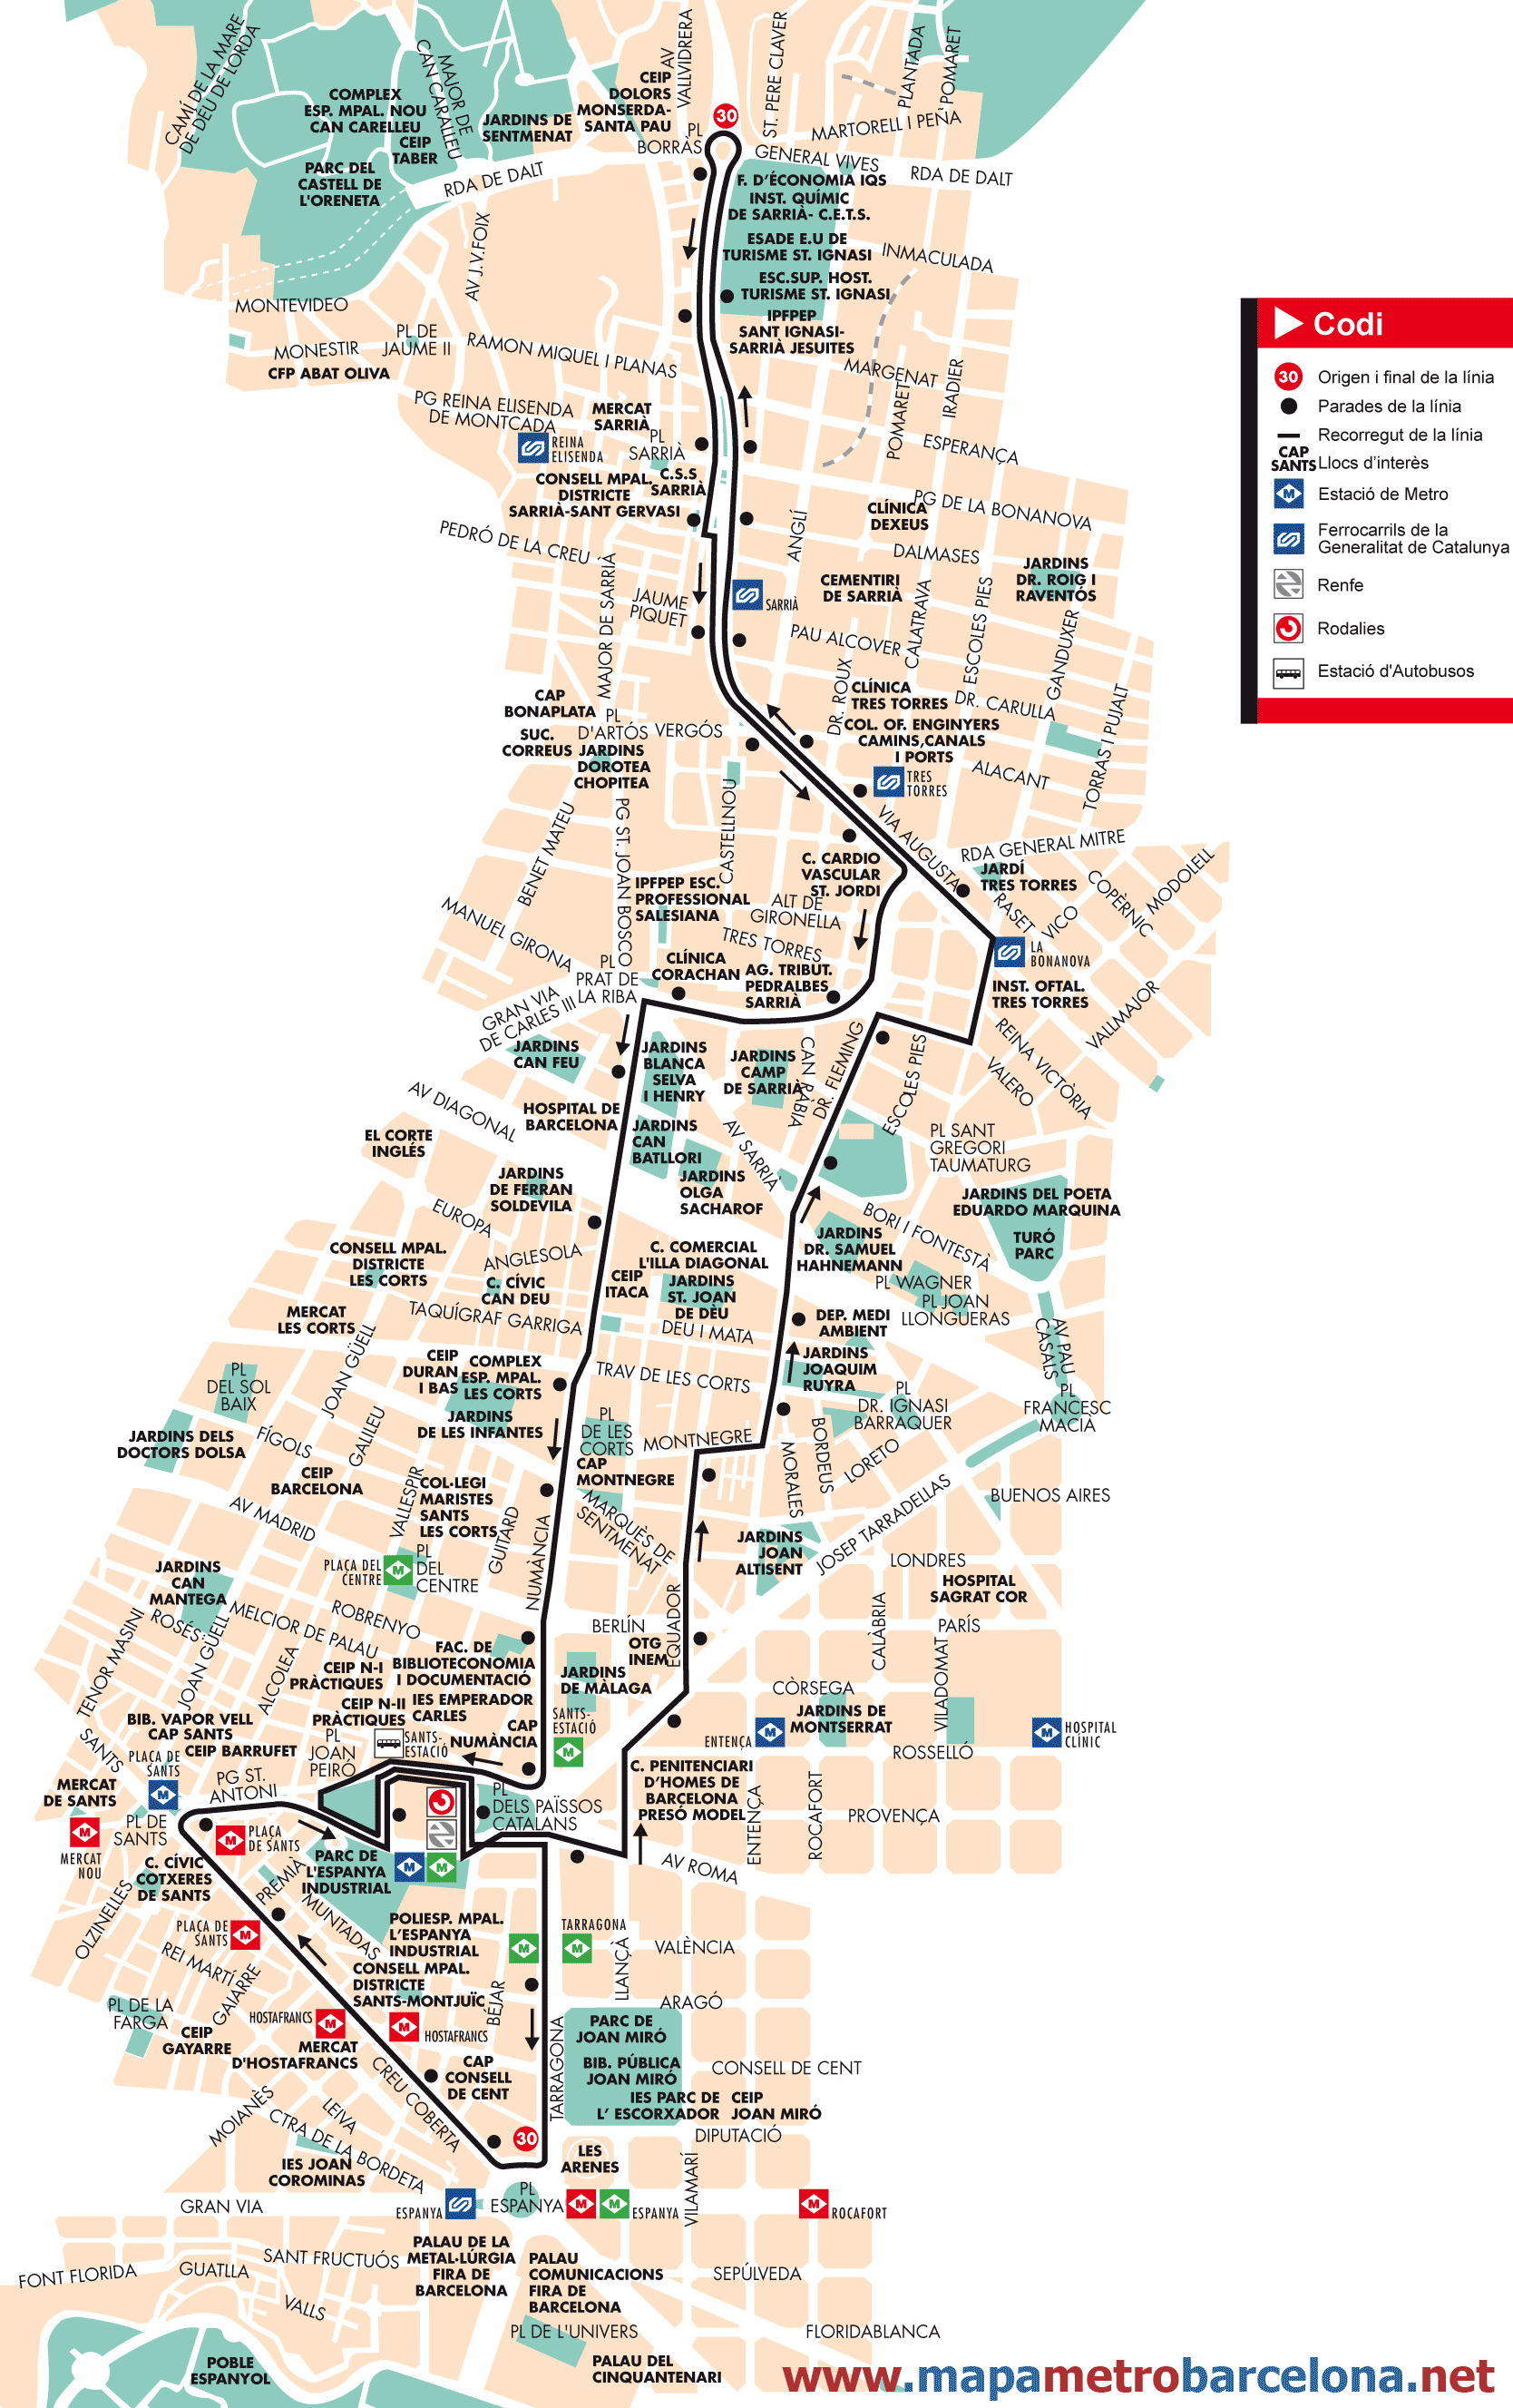 Barcelona bus map line 30